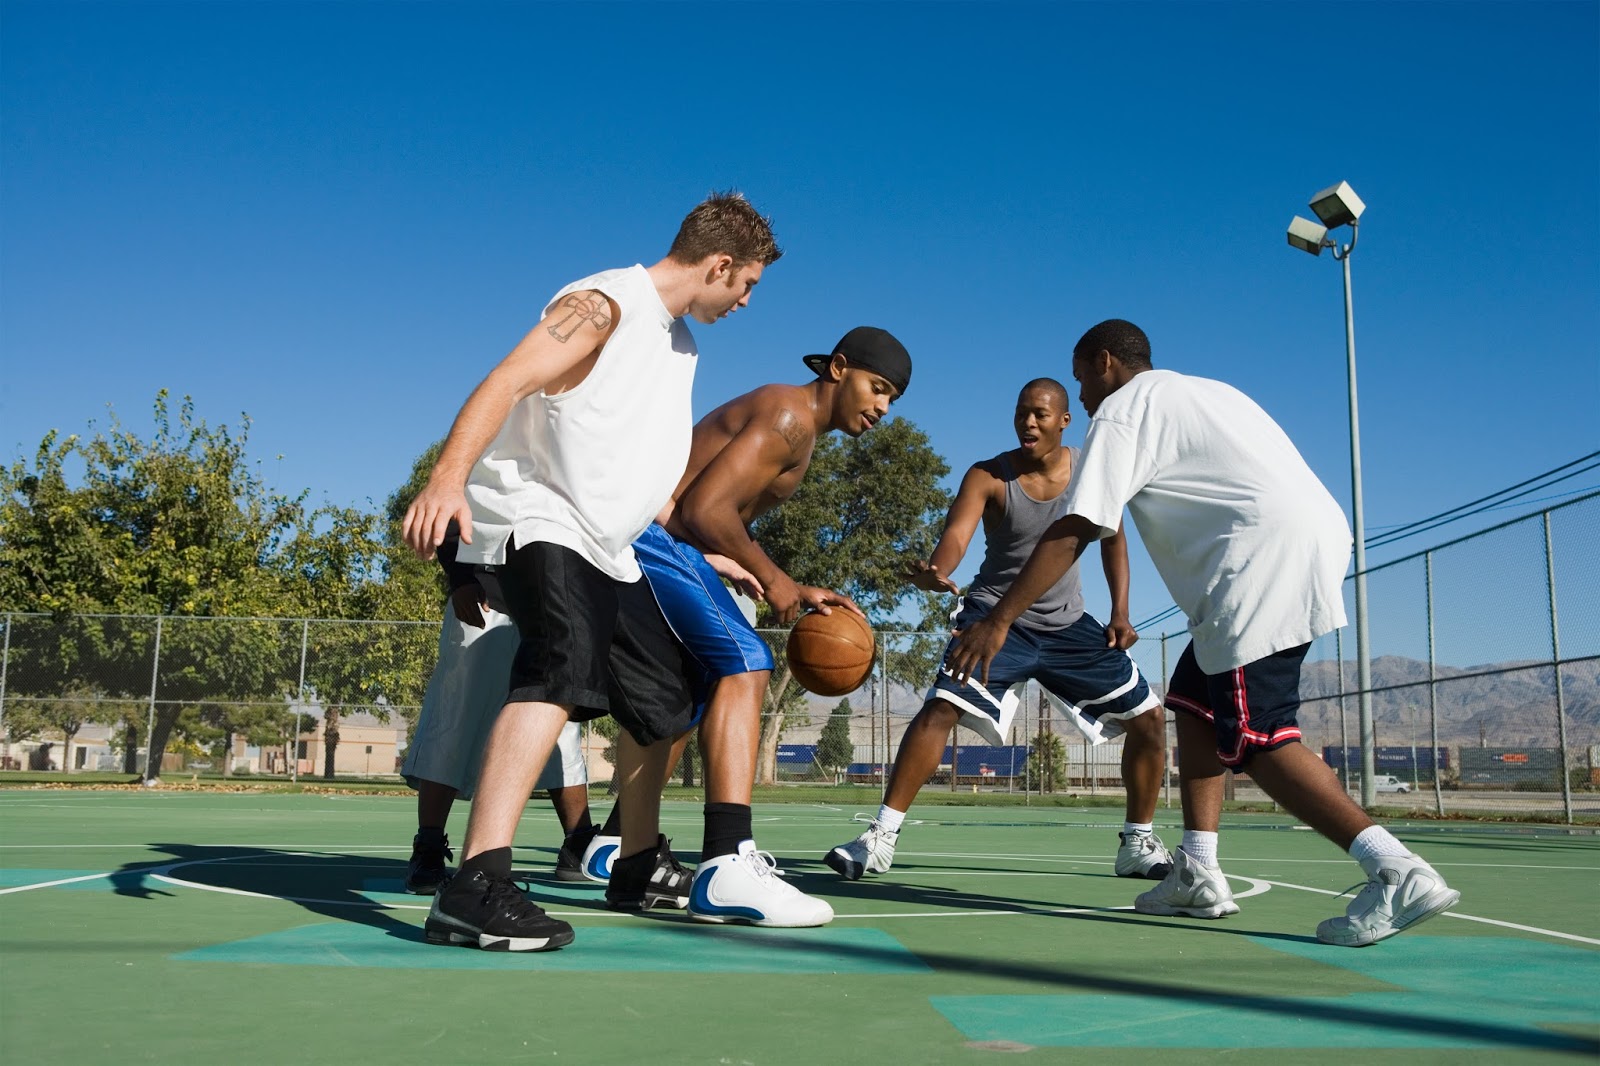 My friend plays basketball than me. Играющие в баскетбол. Дети играют в баскетбол. Люди играют в баскетбол. Игра в баскетбол с друзьями.